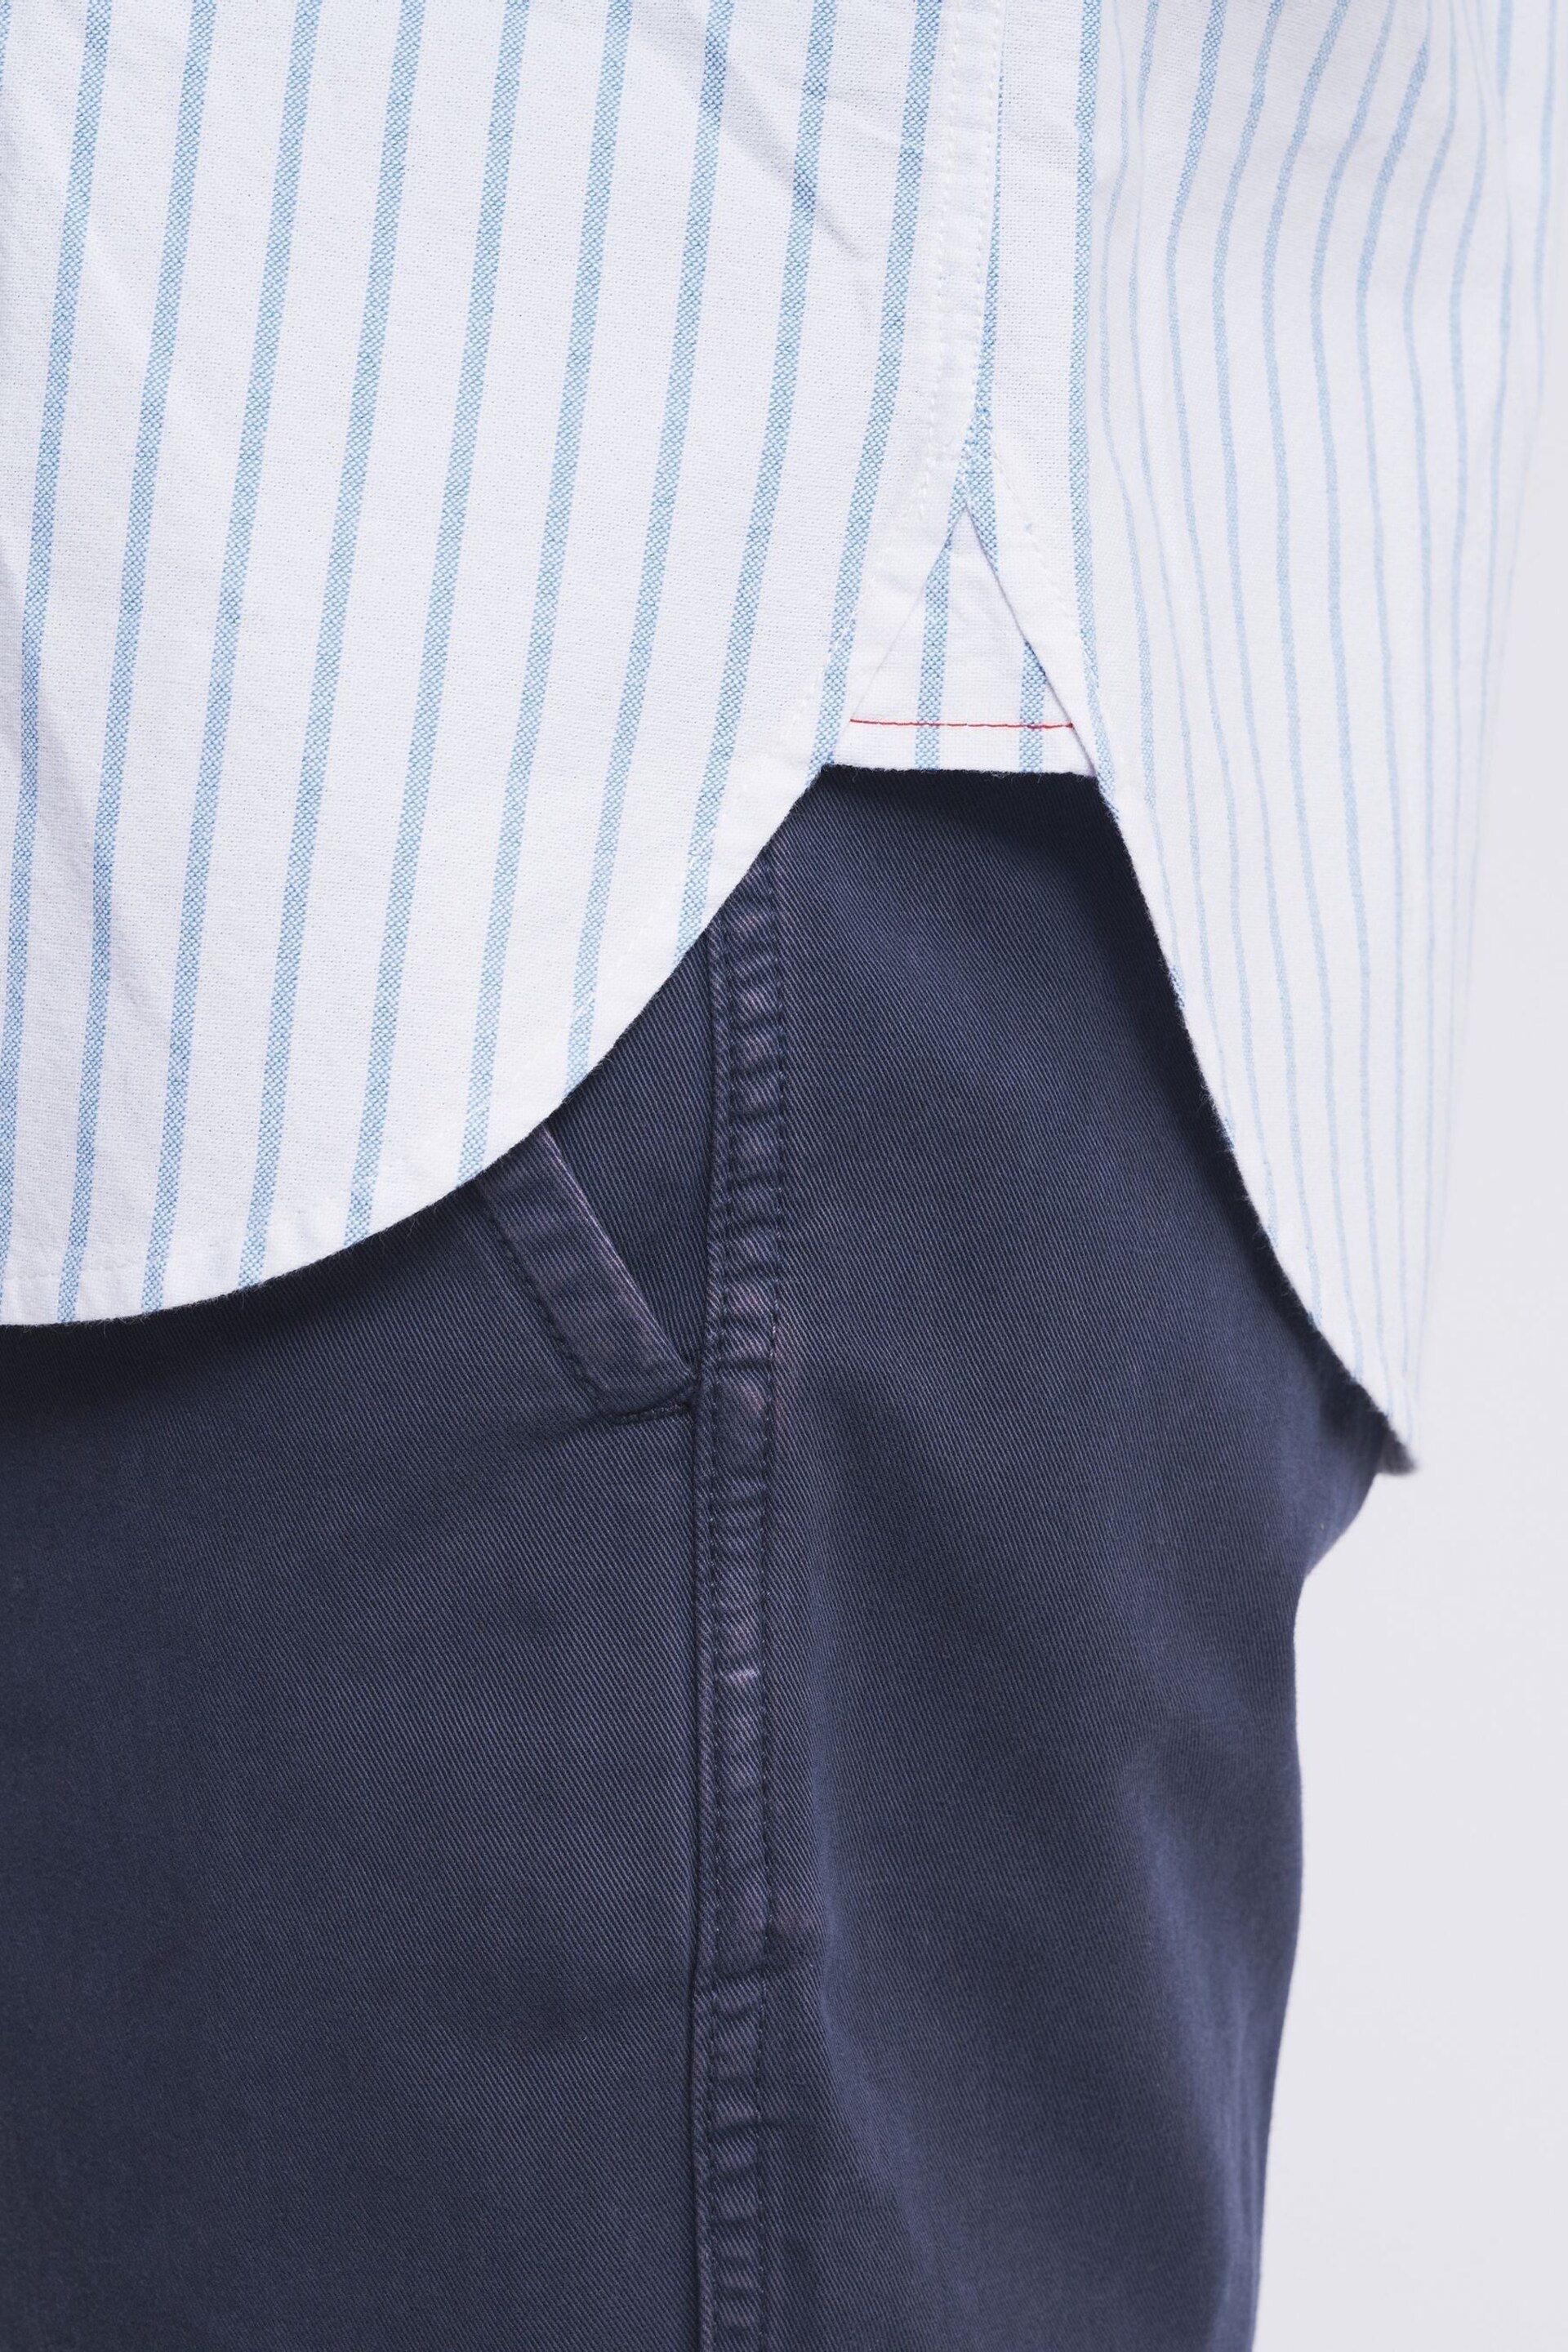 Aubin Aldridge Oxford Button Down Shirt - Image 6 of 8